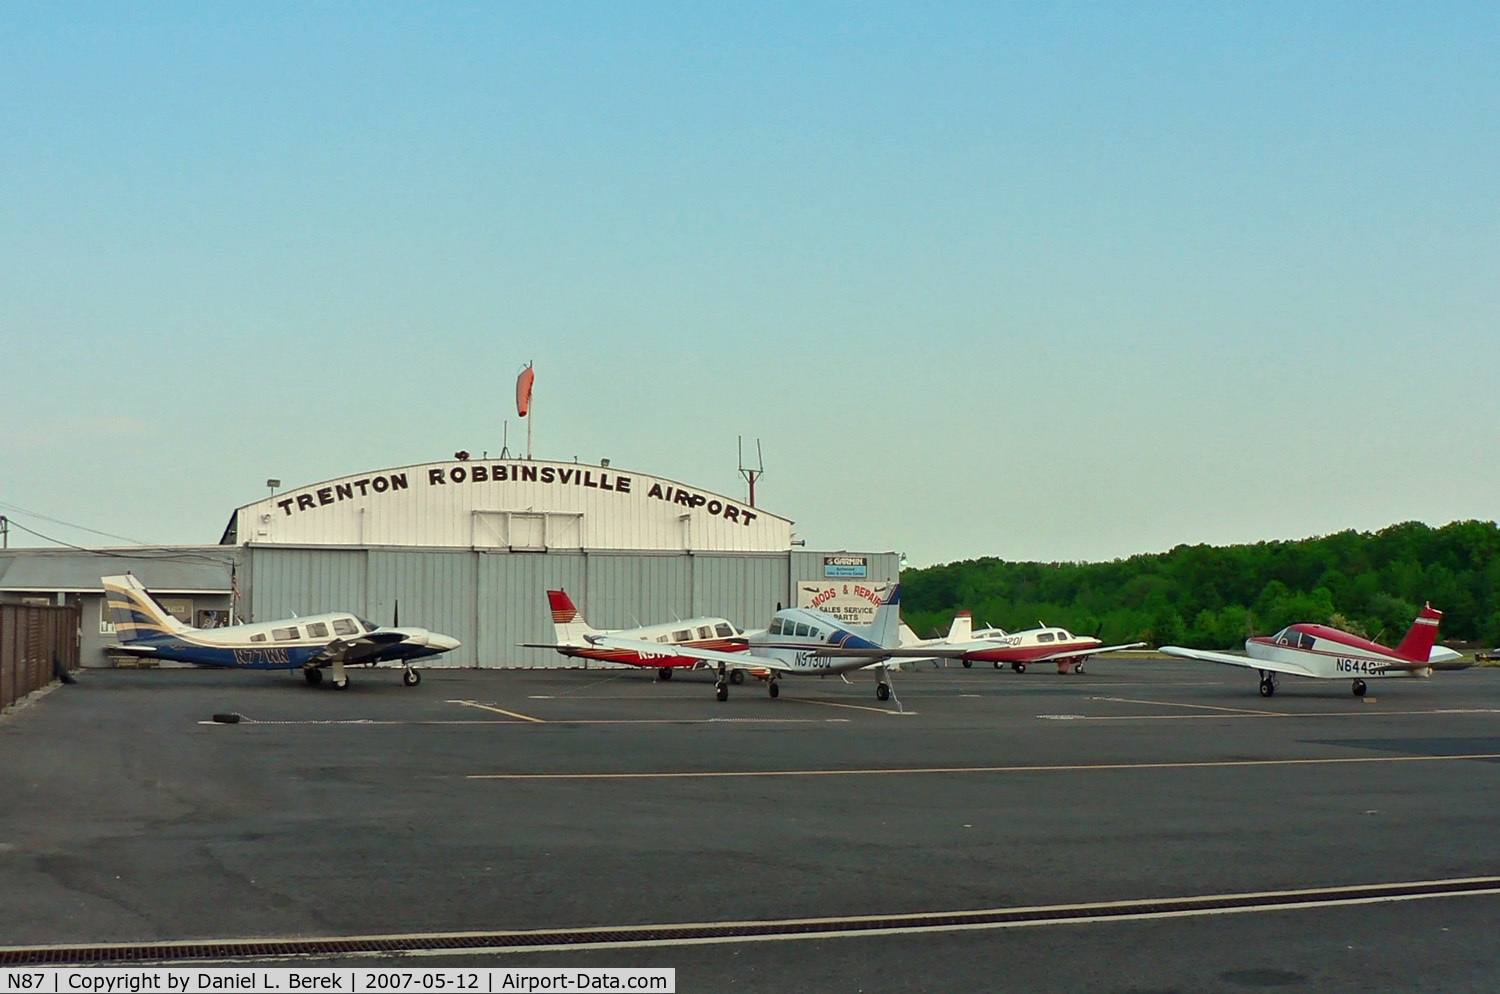 Trenton-robbinsville Airport (N87) - Trenton-Robbinsville is a friendly little airport close to Trenton, NJ.